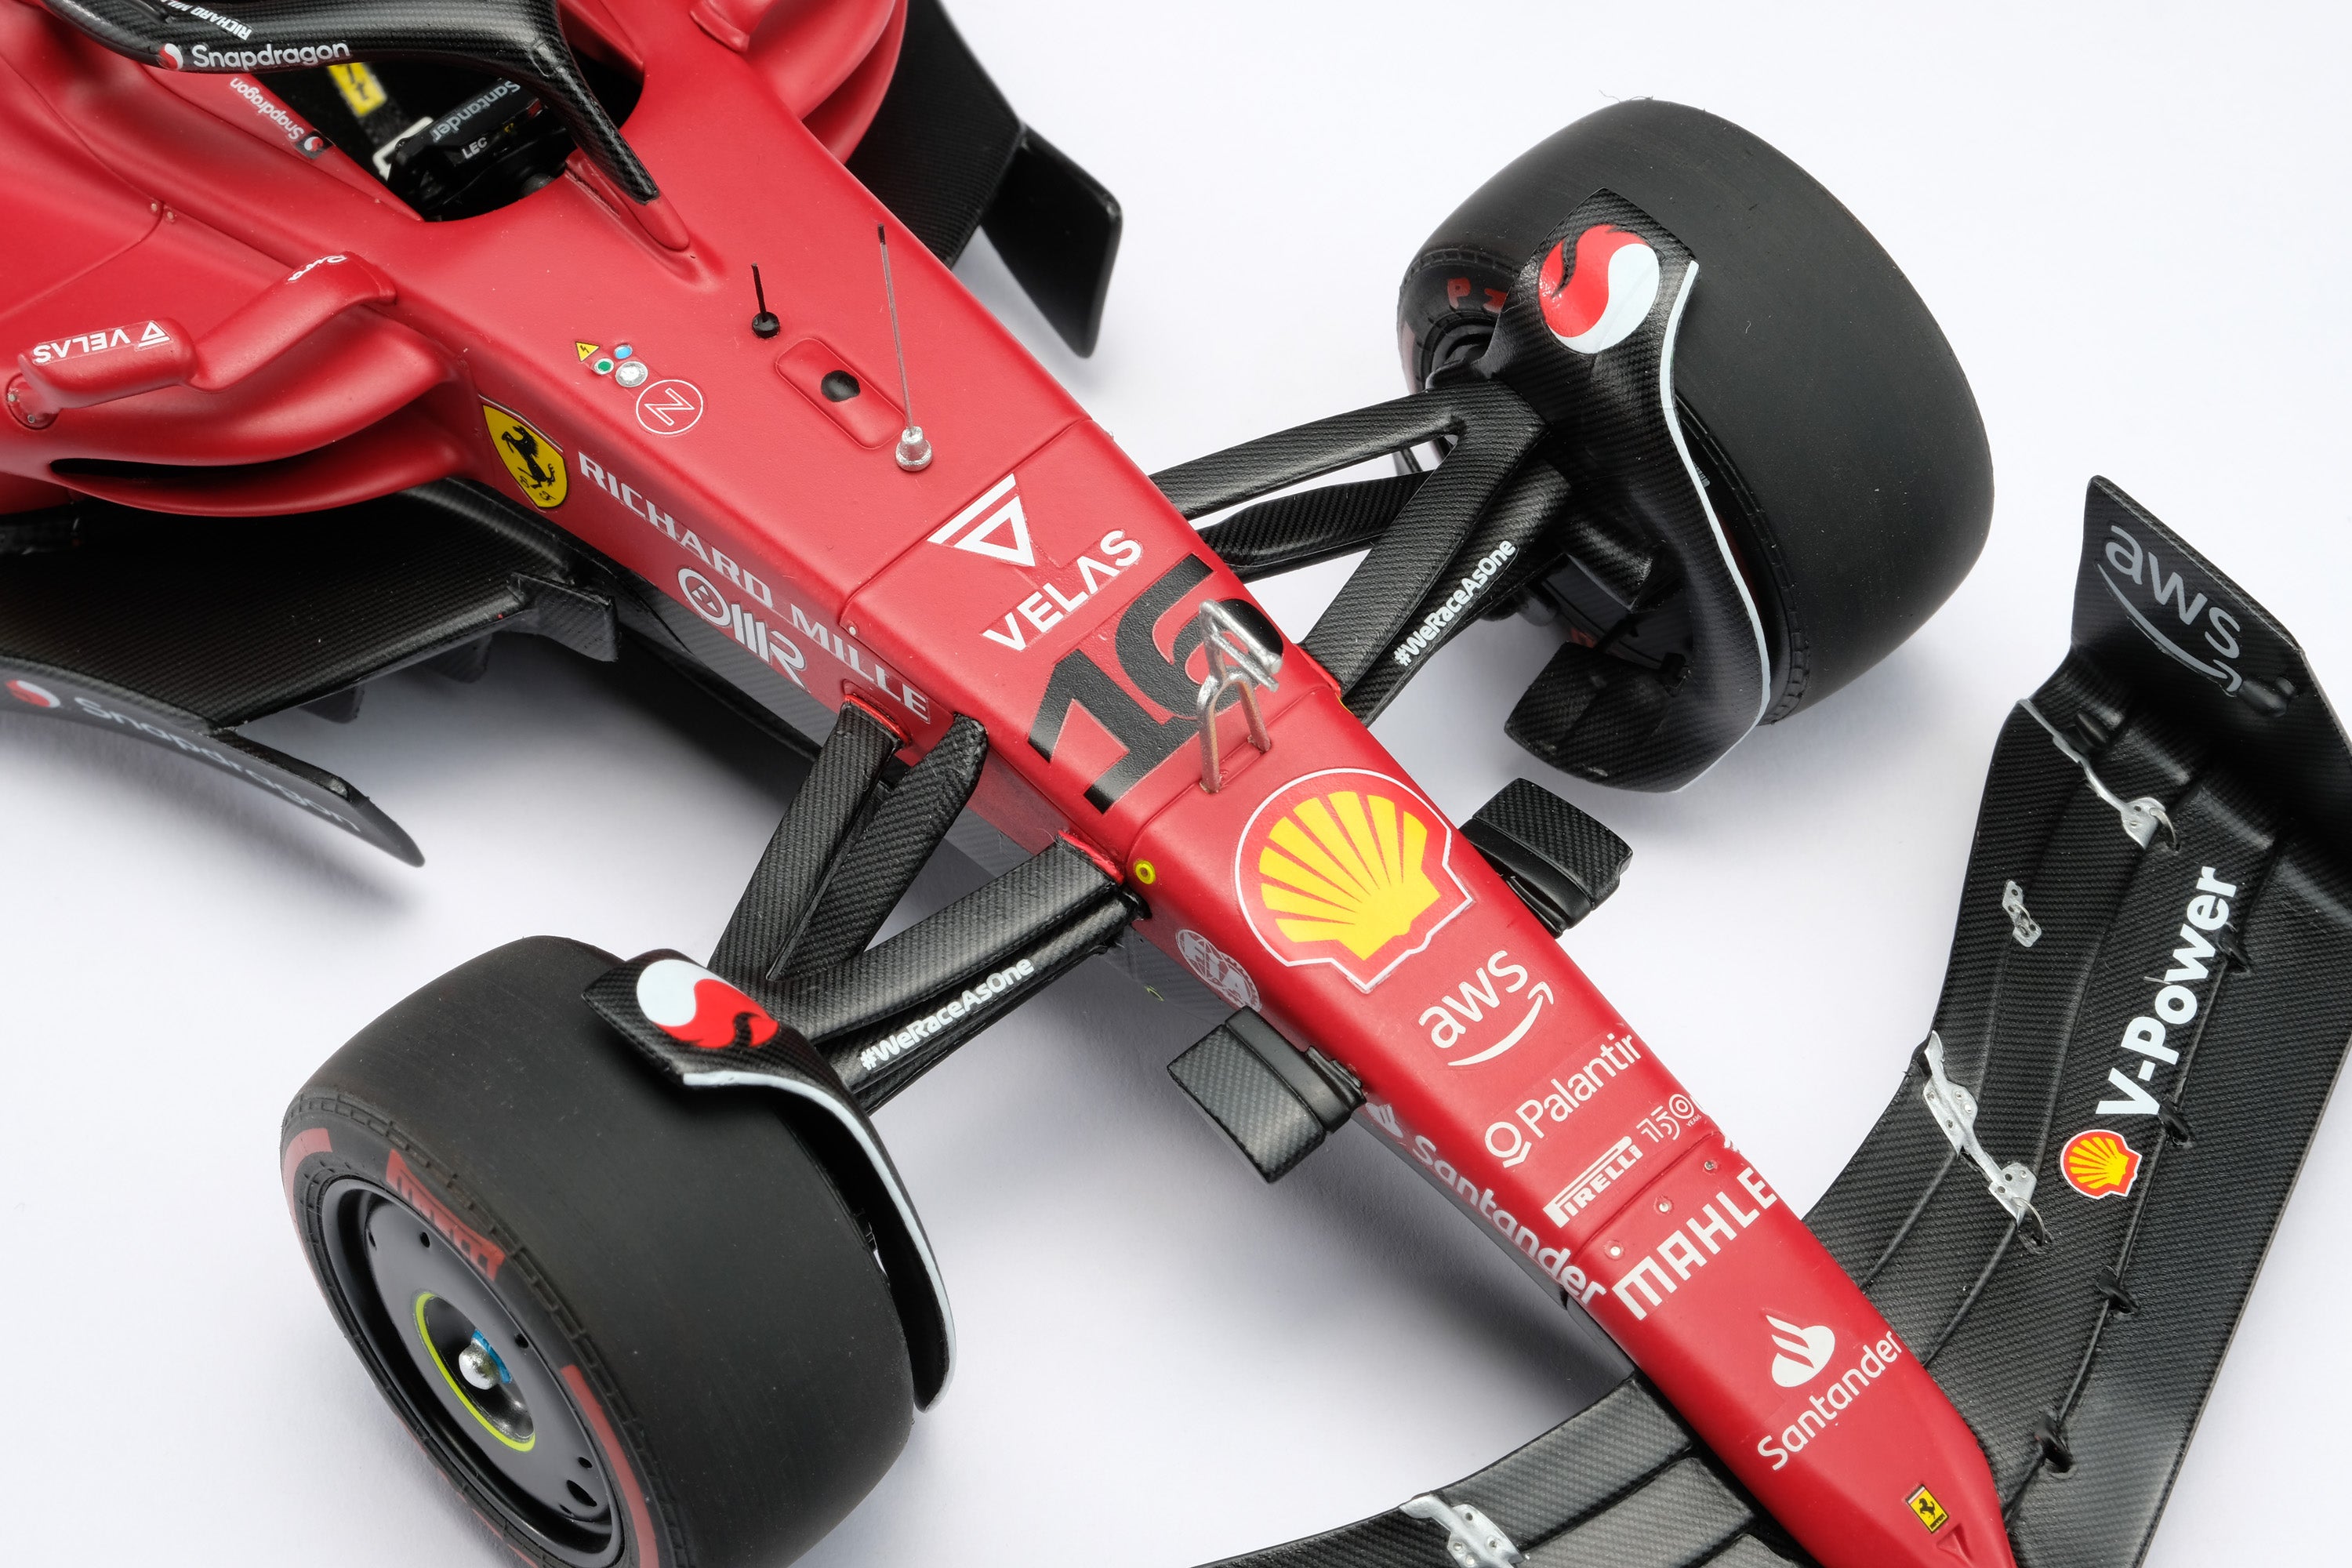 Charles Leclerc 2022 1:8 Scale Model Scuderia Ferrari F1-75 - Bahrain GP